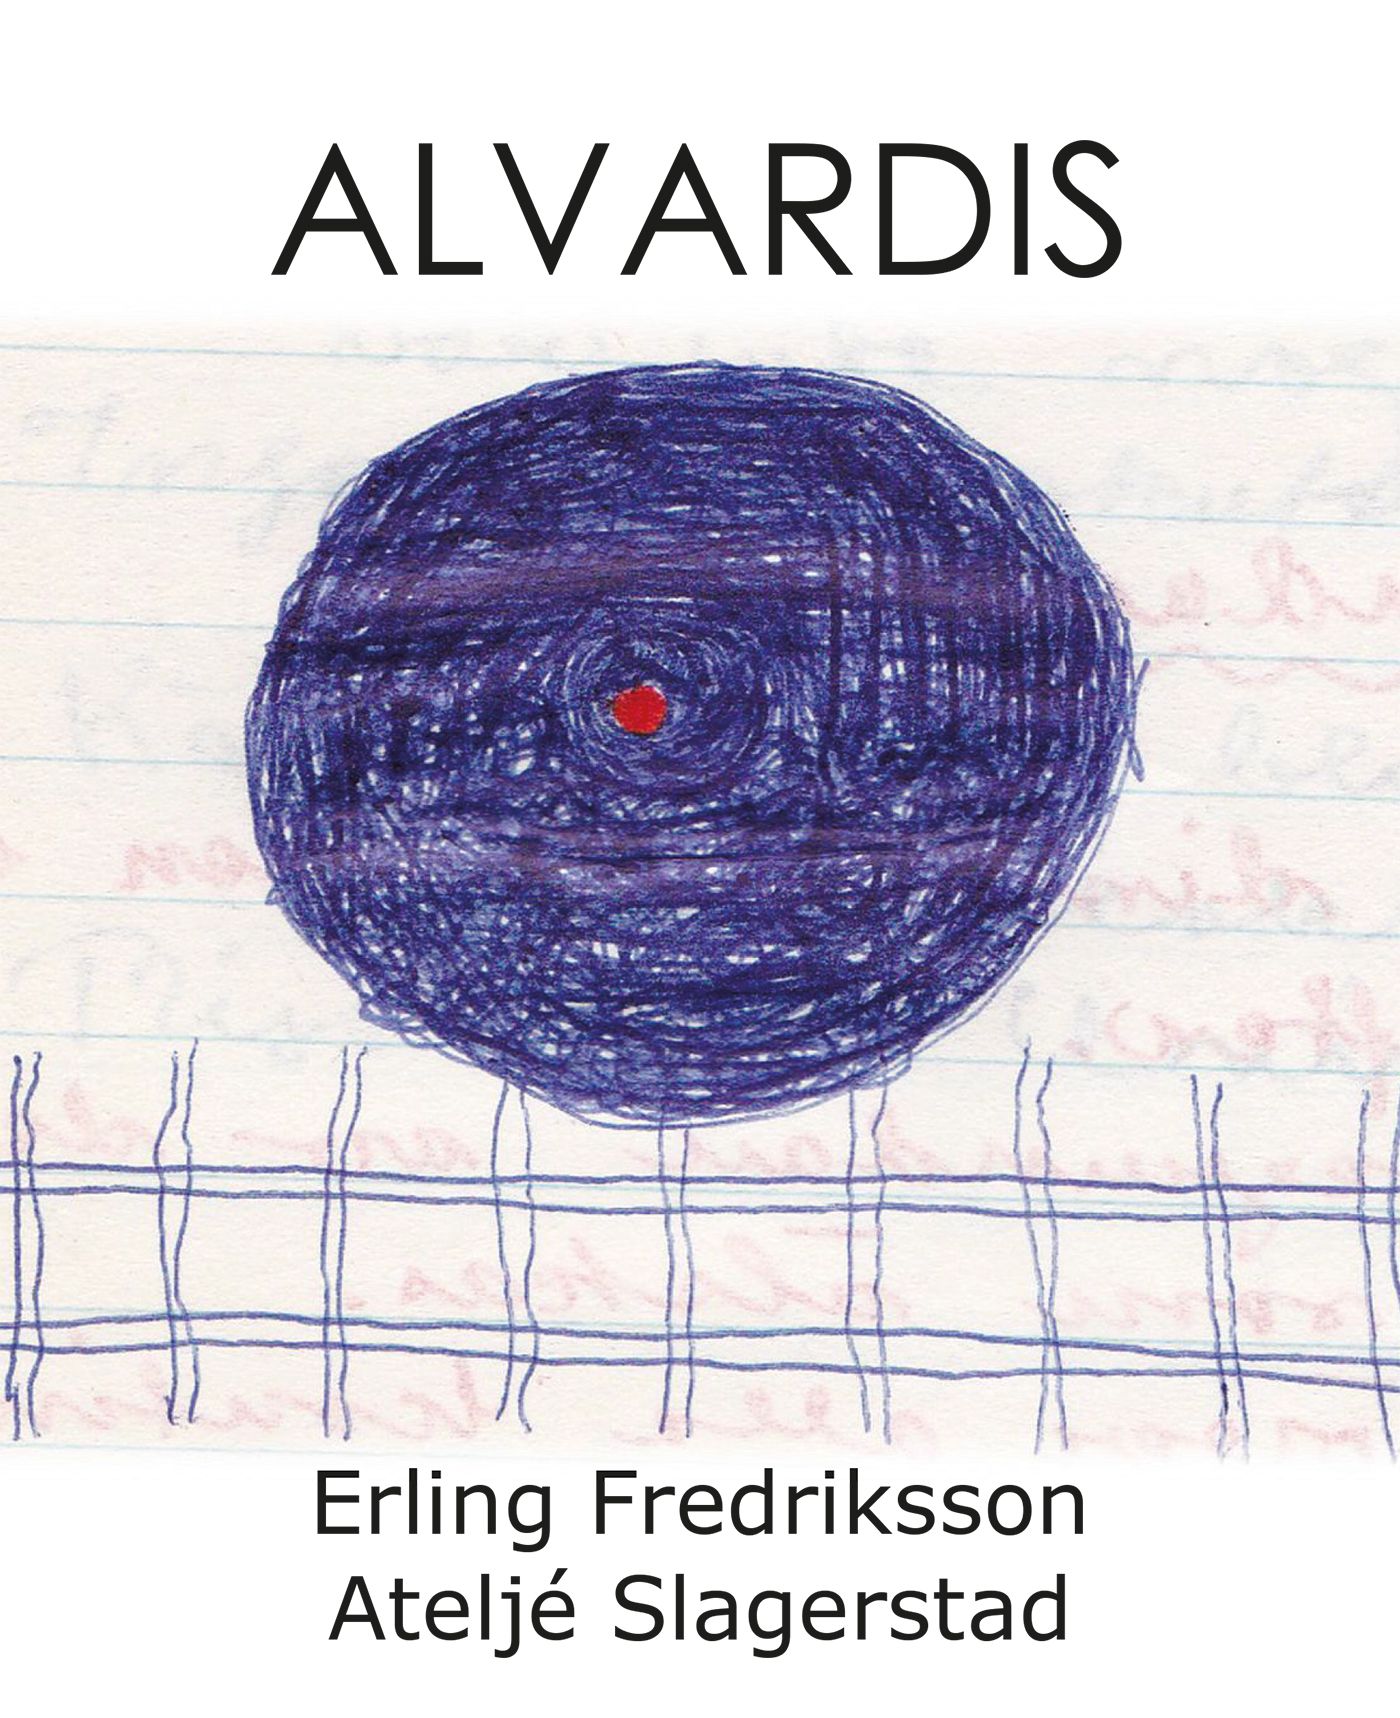 Alvardis, eBook by Erling Fredriksson